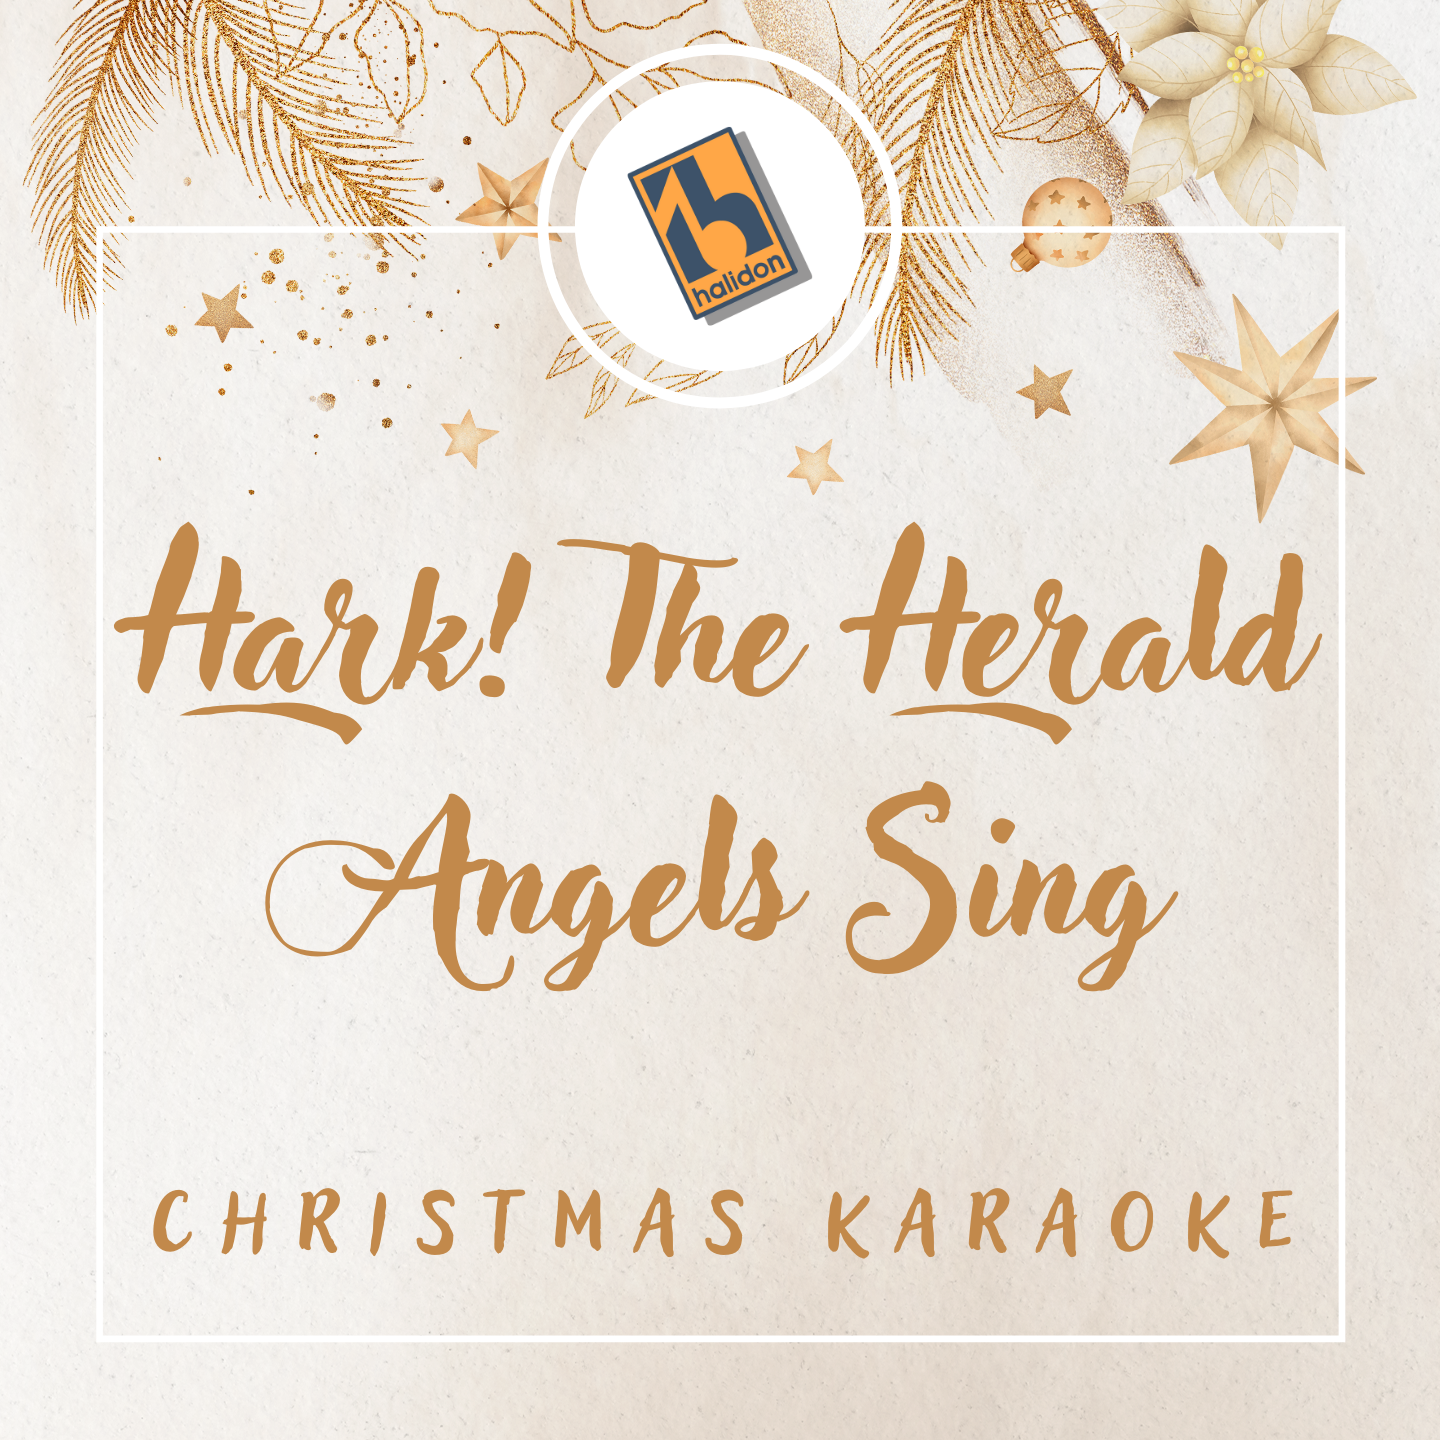 Hark! The Herald Angels Sing	(Karaoke)